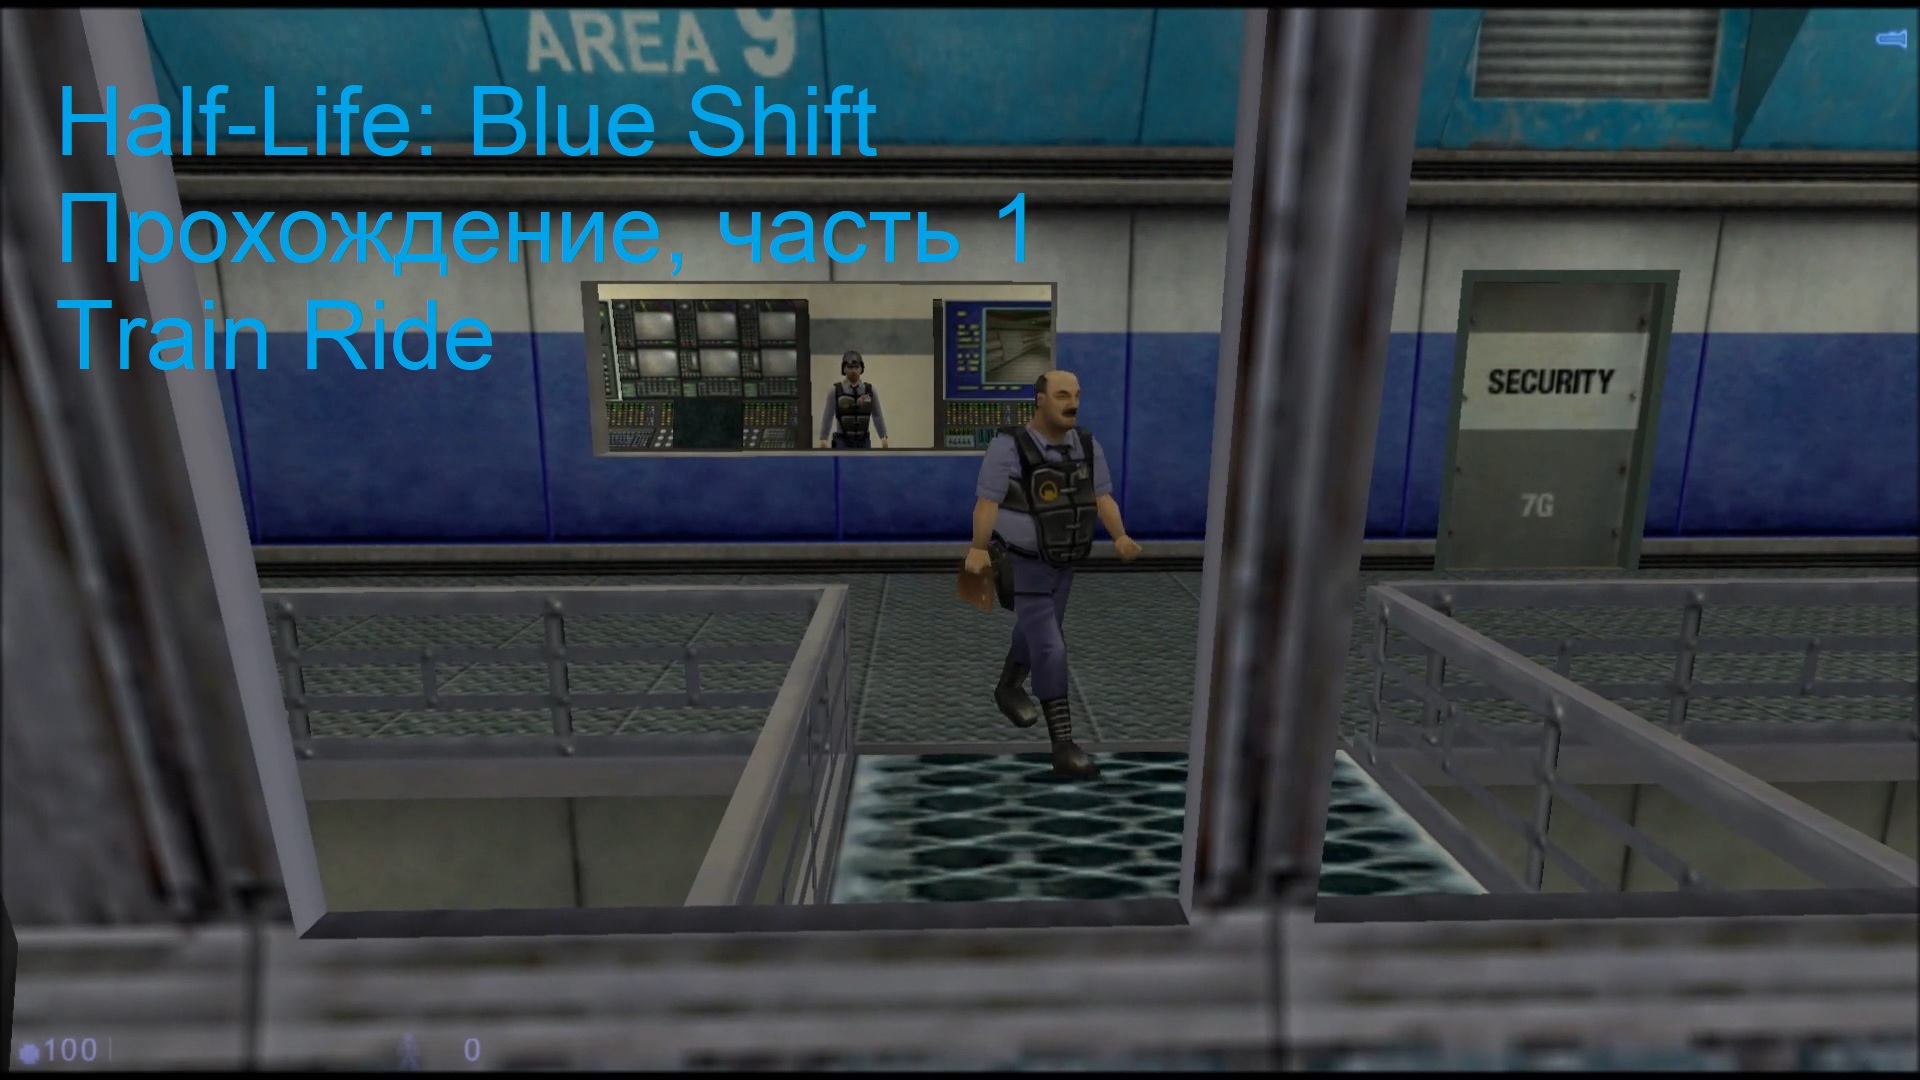 Half-Life: Blue Shift, Прохождение, часть 1 - Train Ride